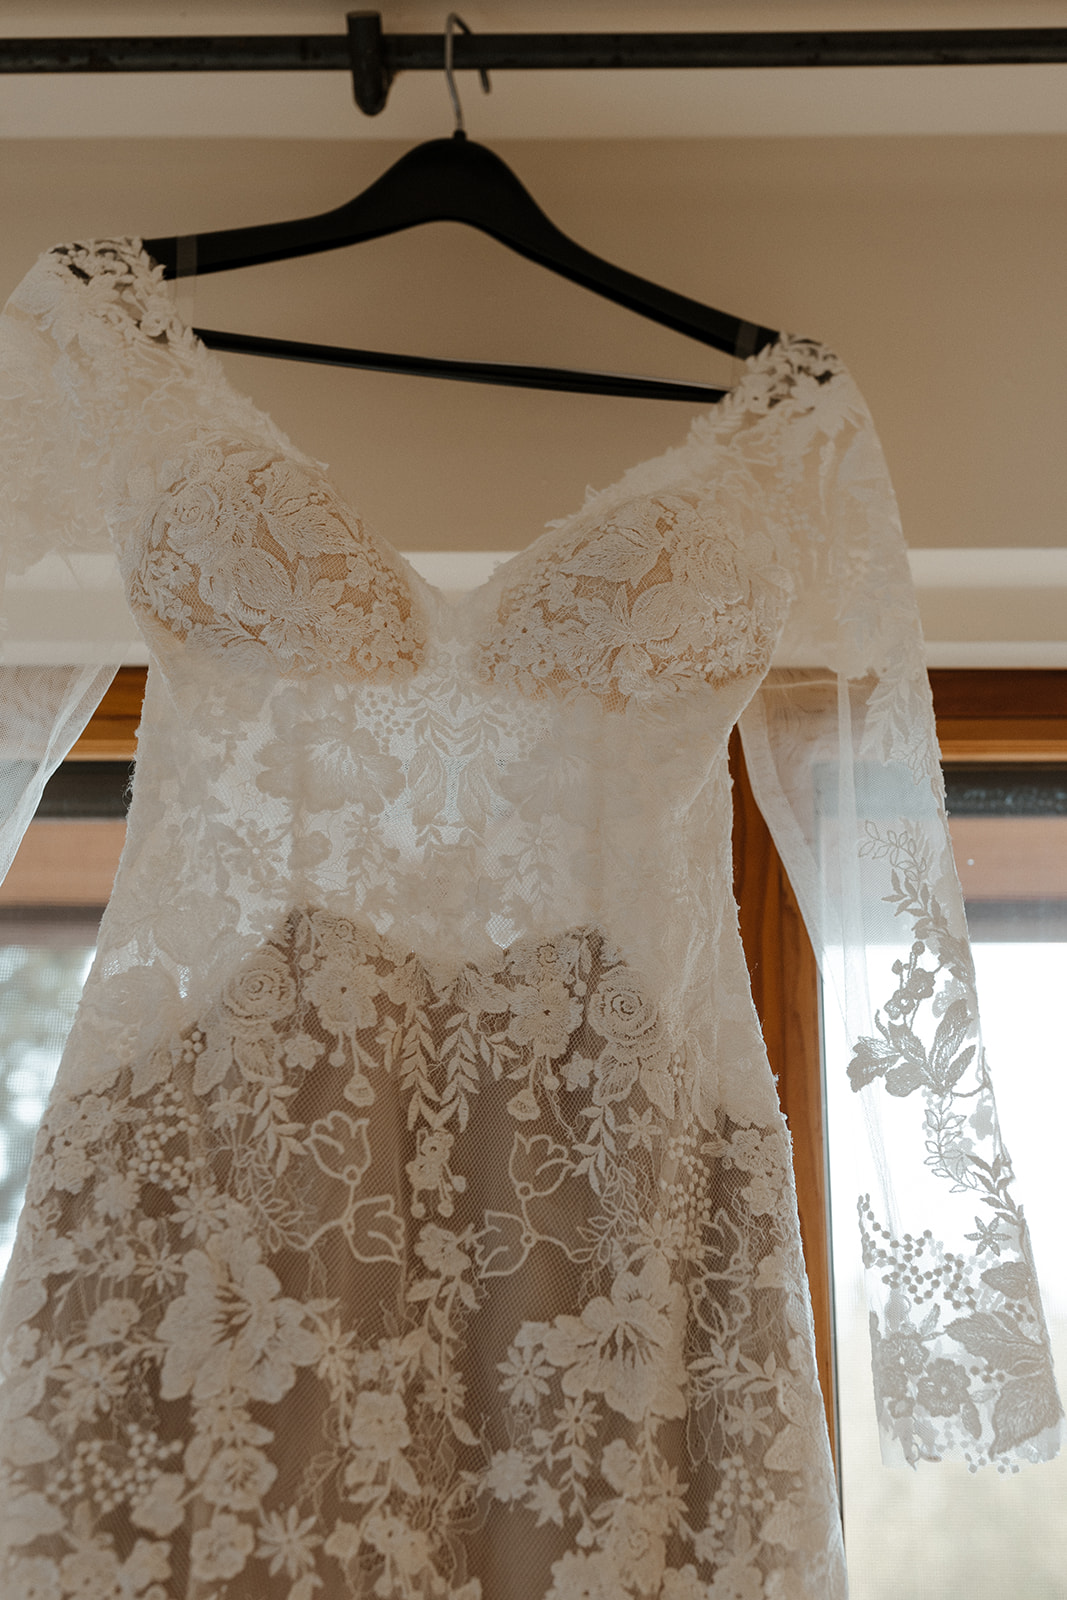 close up of bride's dress hanging